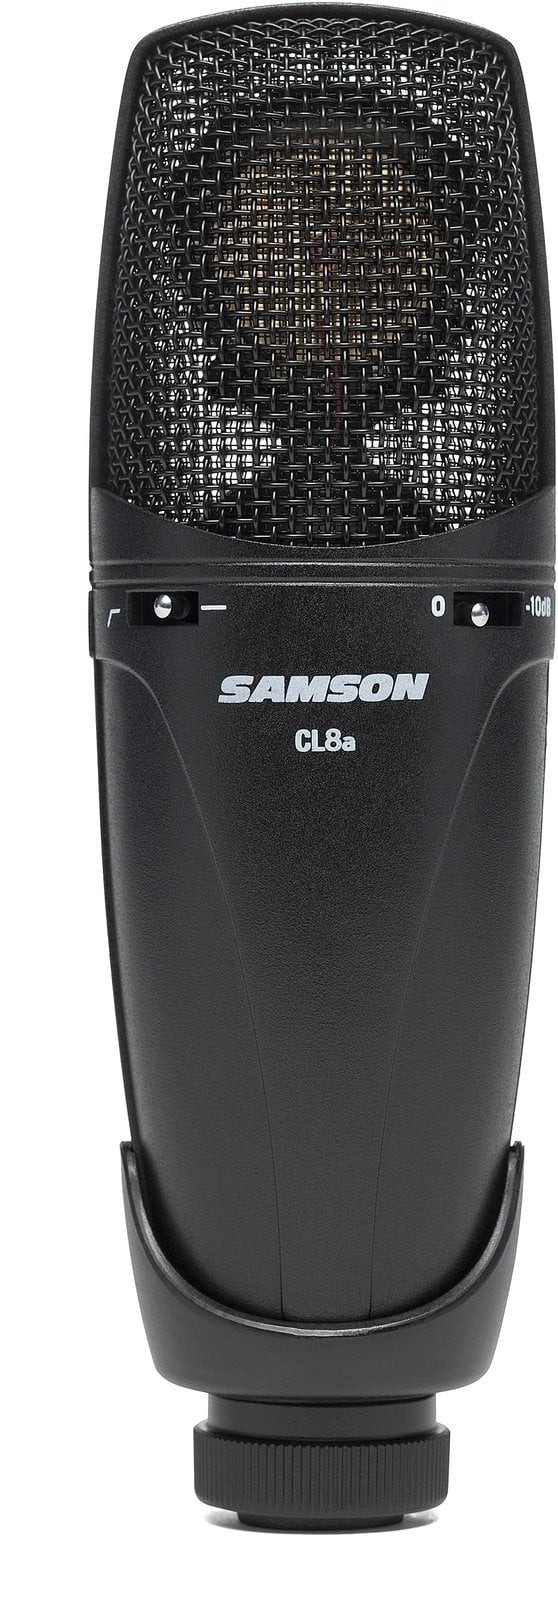 Studio Condenser Microphone Samson CL8a Studio Condenser Microphone